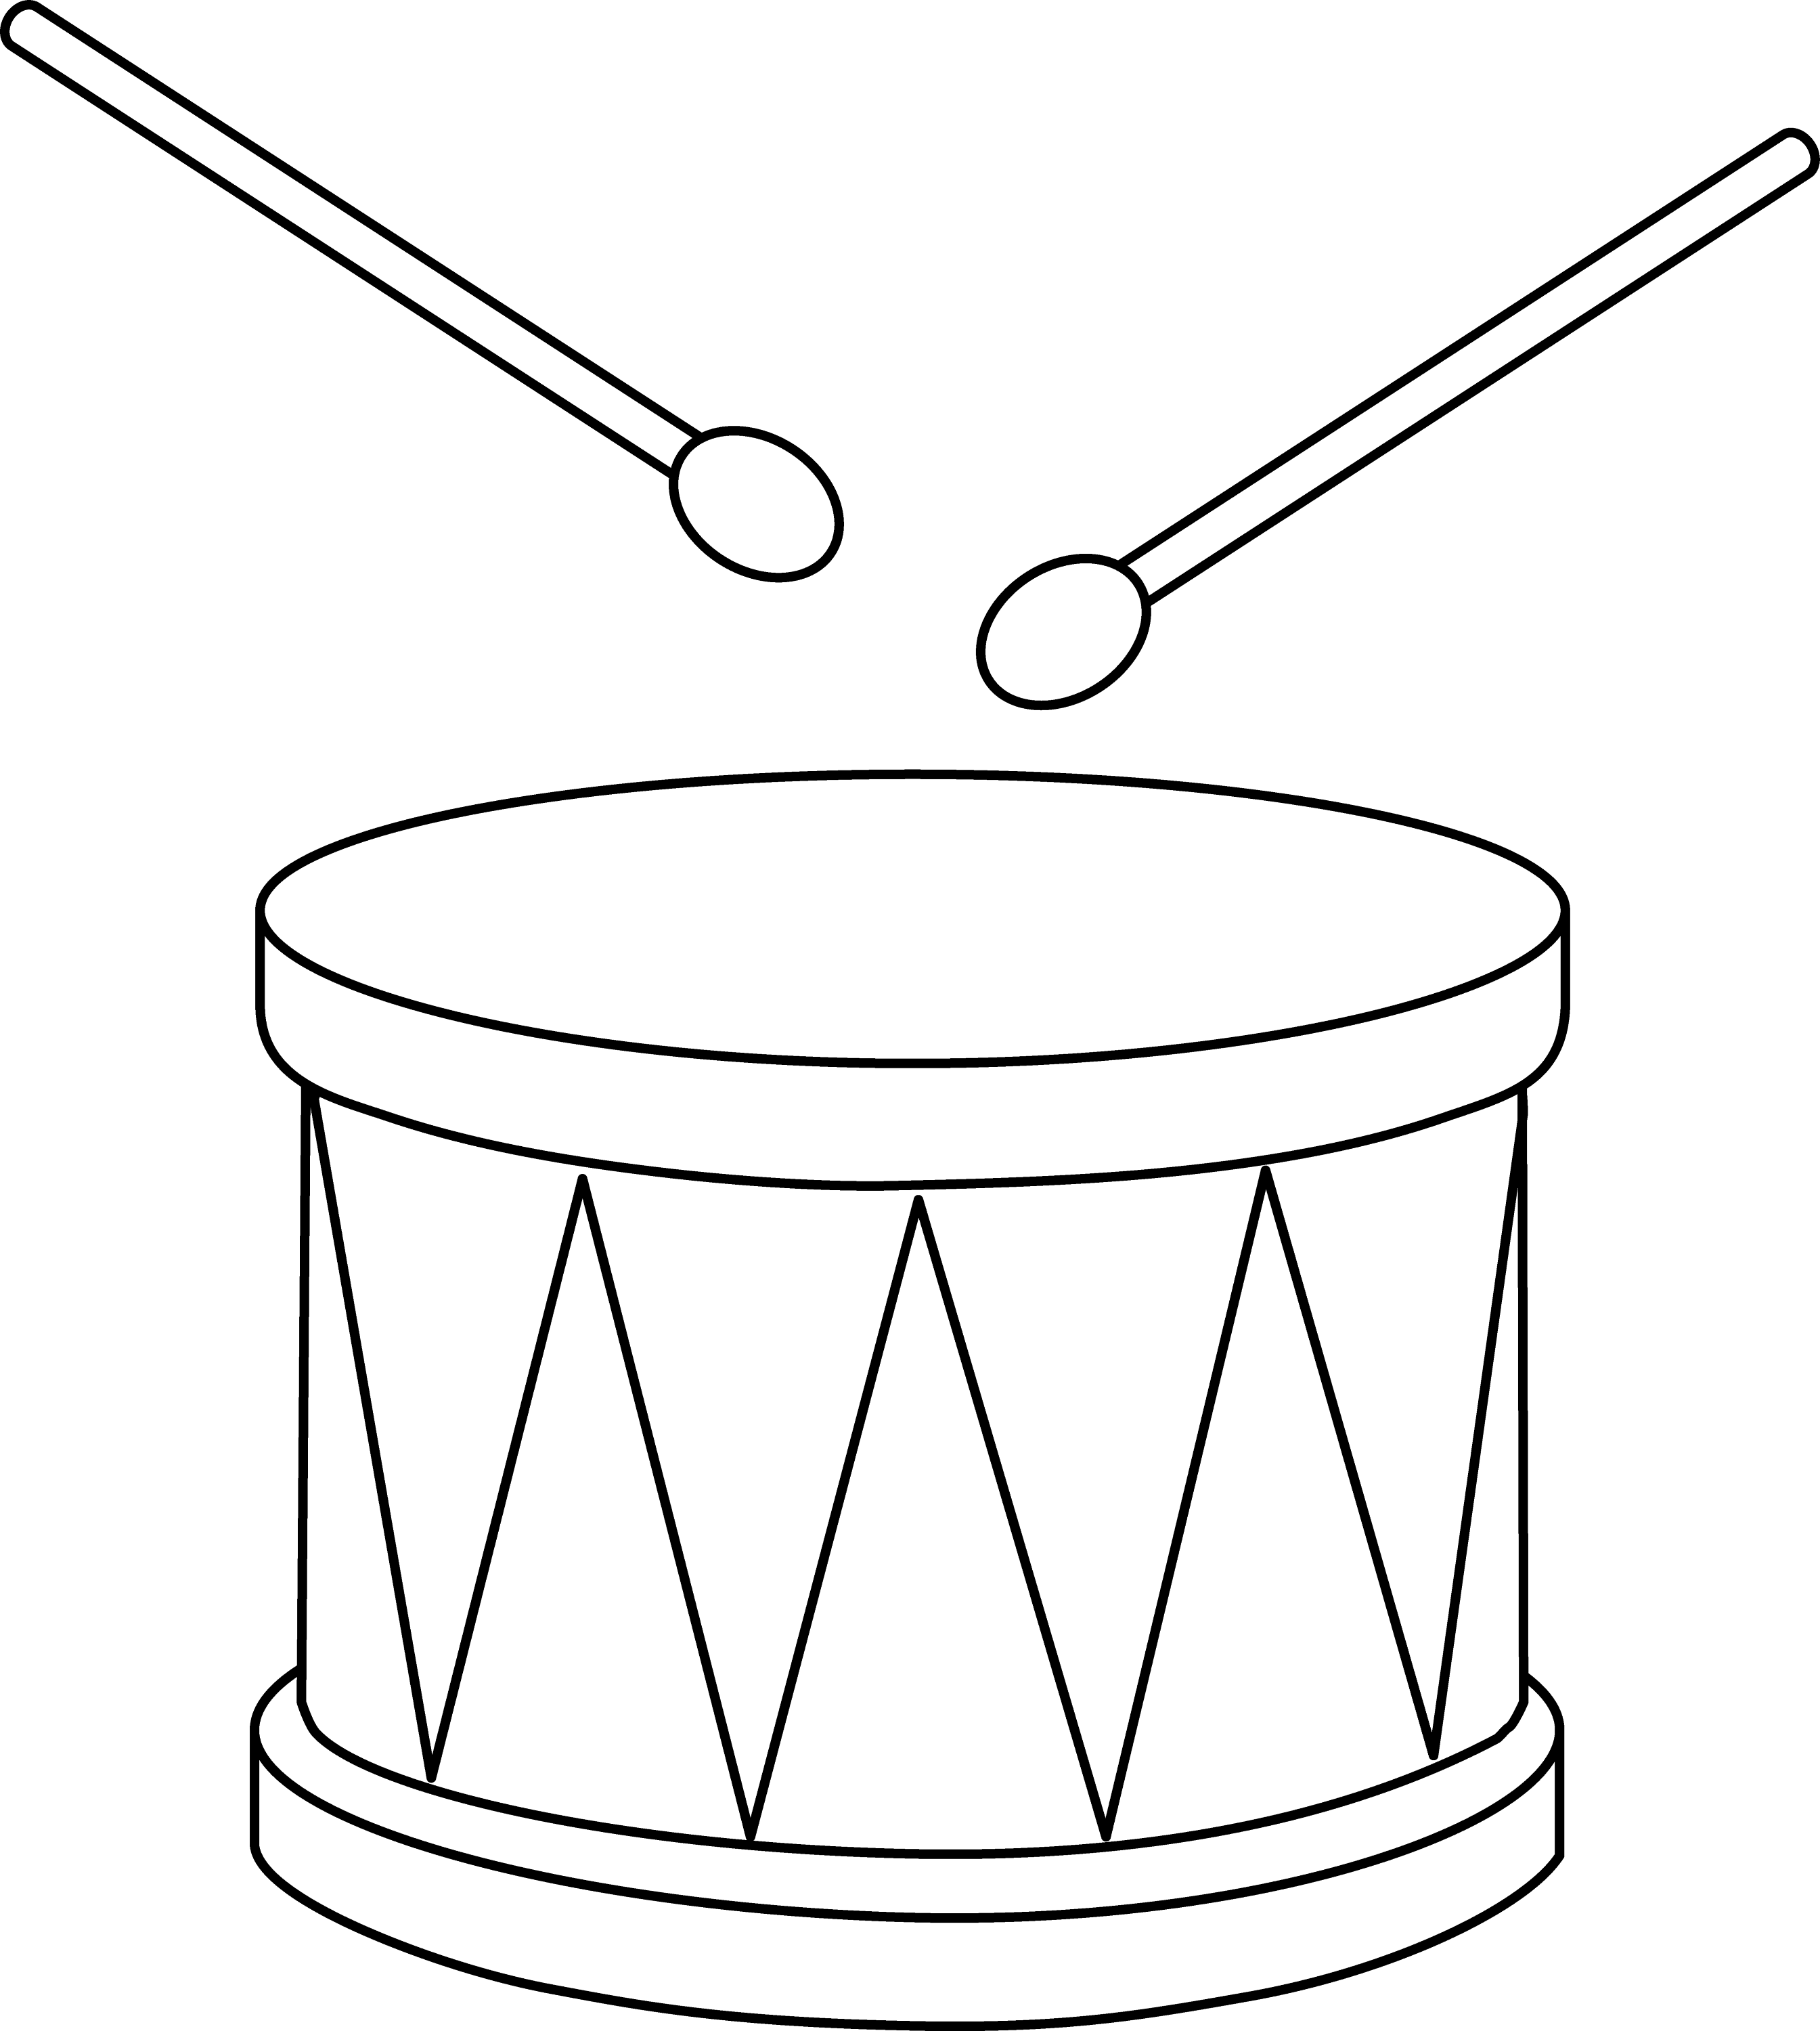 drum coloring